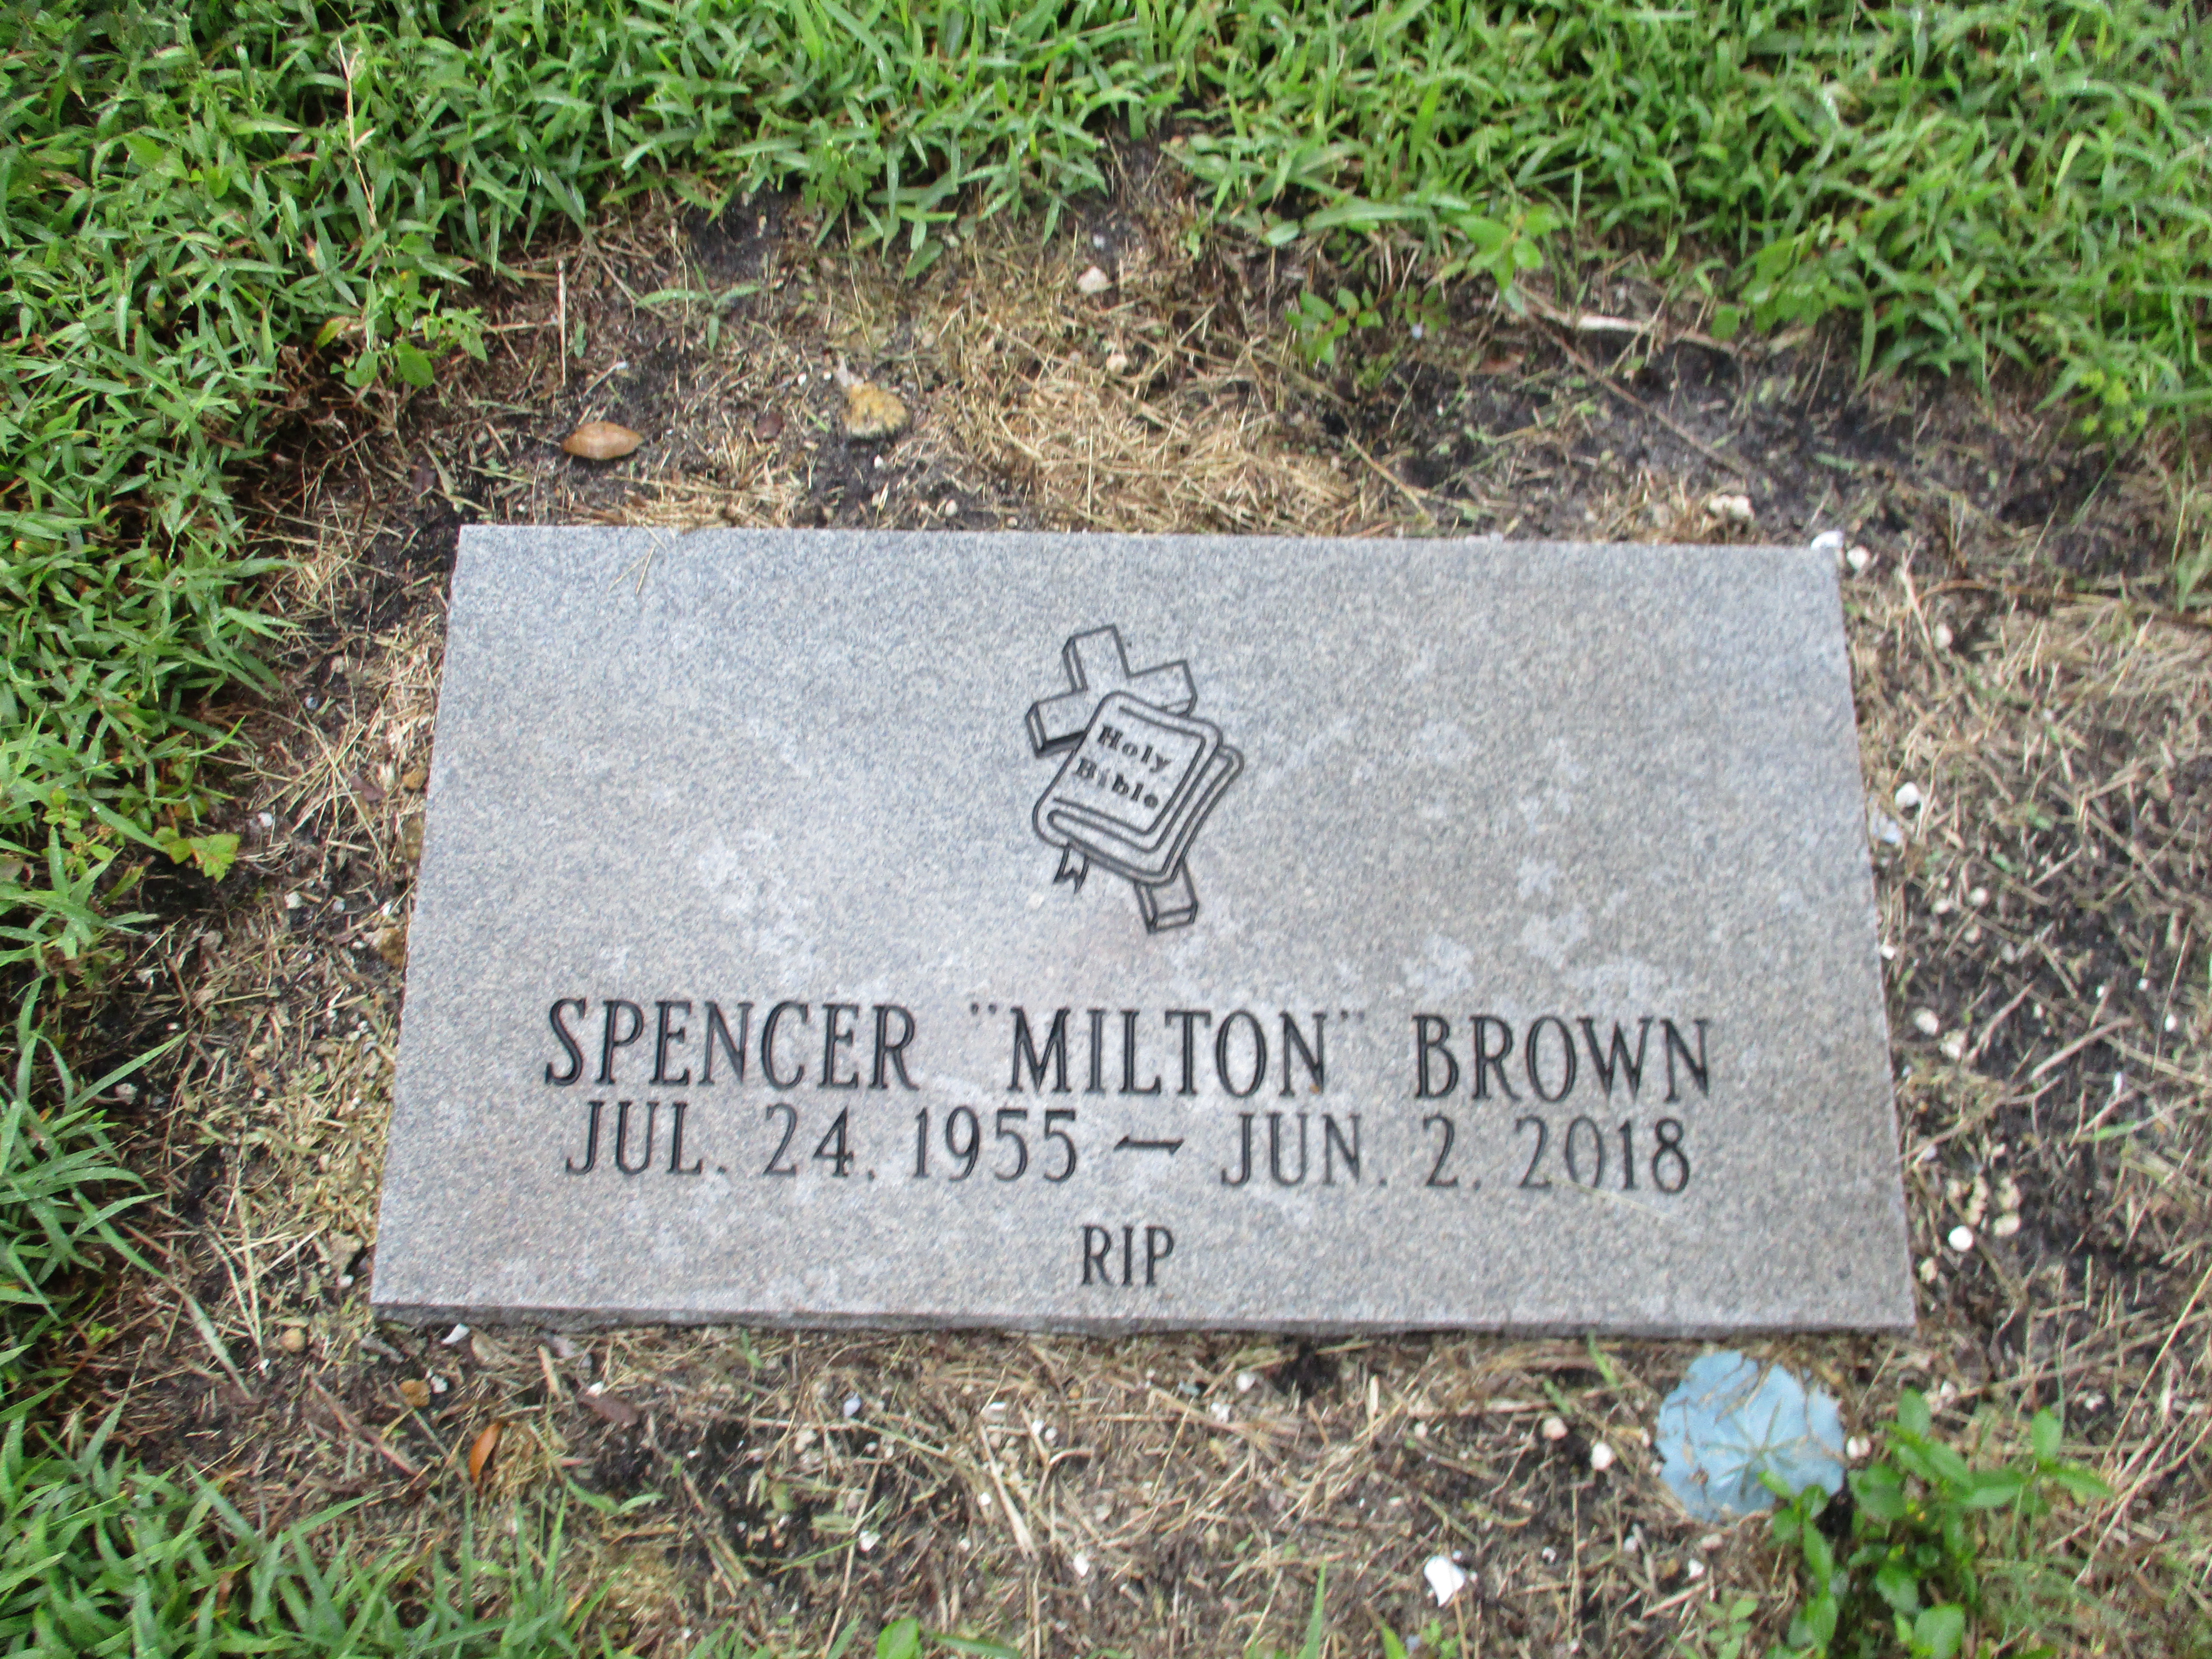 Spencer "Milton" Brown